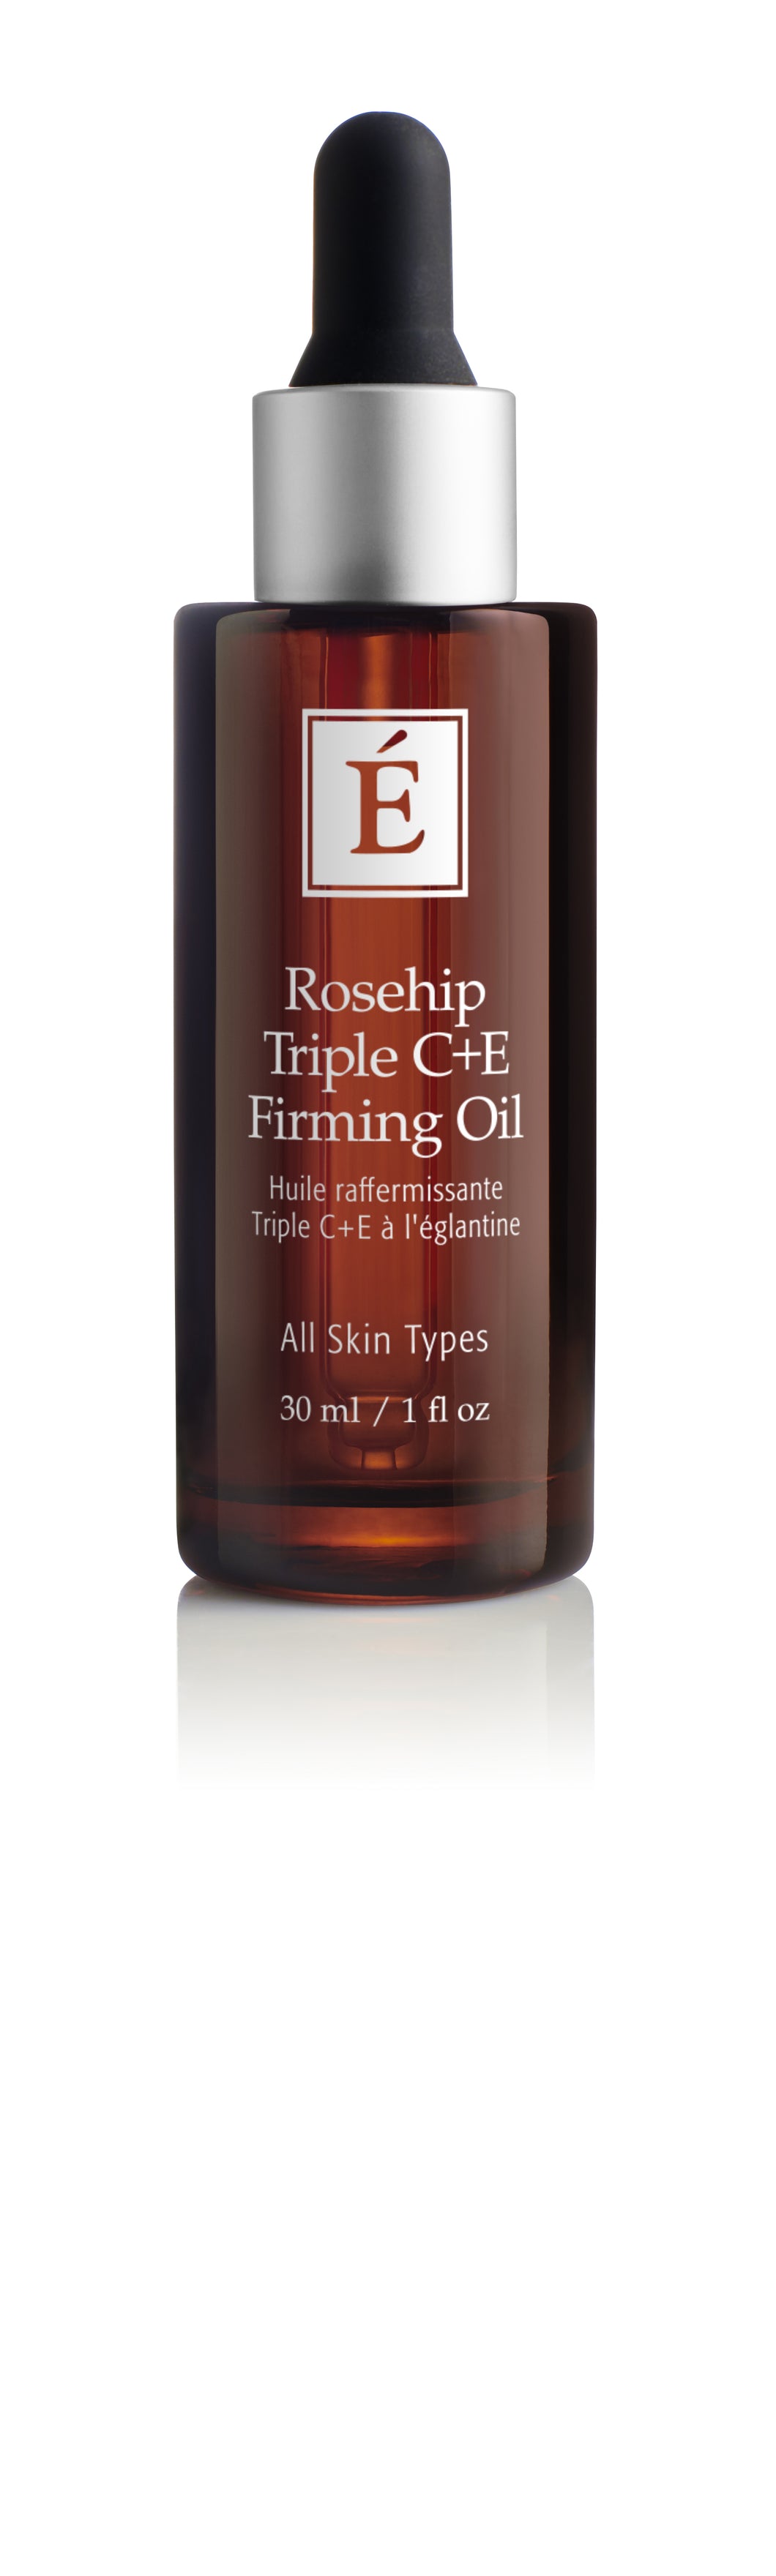 Eminence: Rosehip Triple C+E Firming Oil